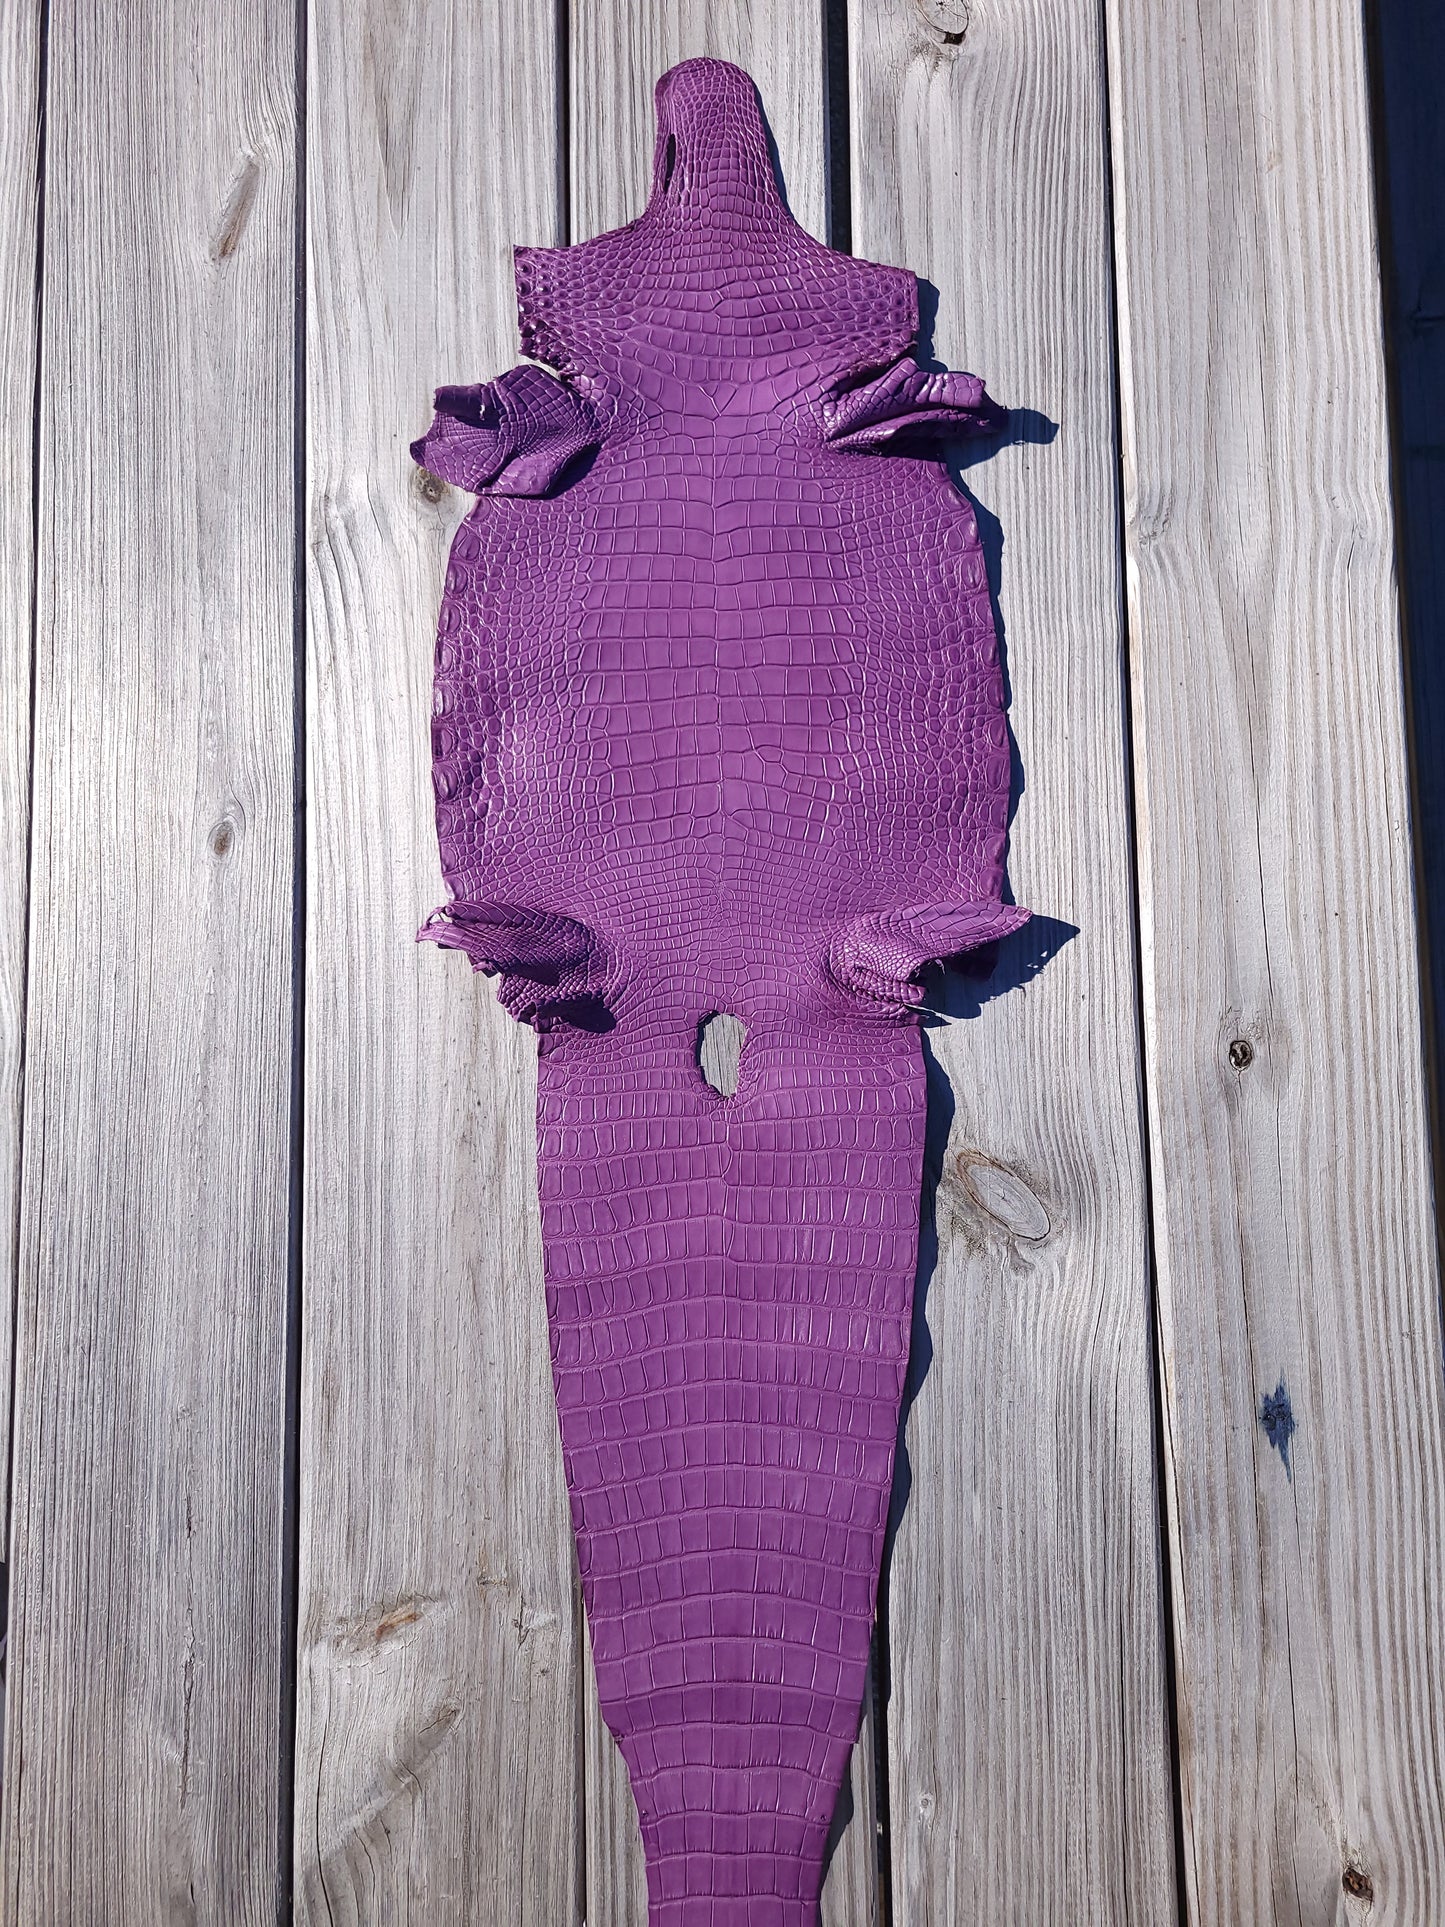 American Alligator -26cm-Grade 1/2 Lavendar Purple (Matte)